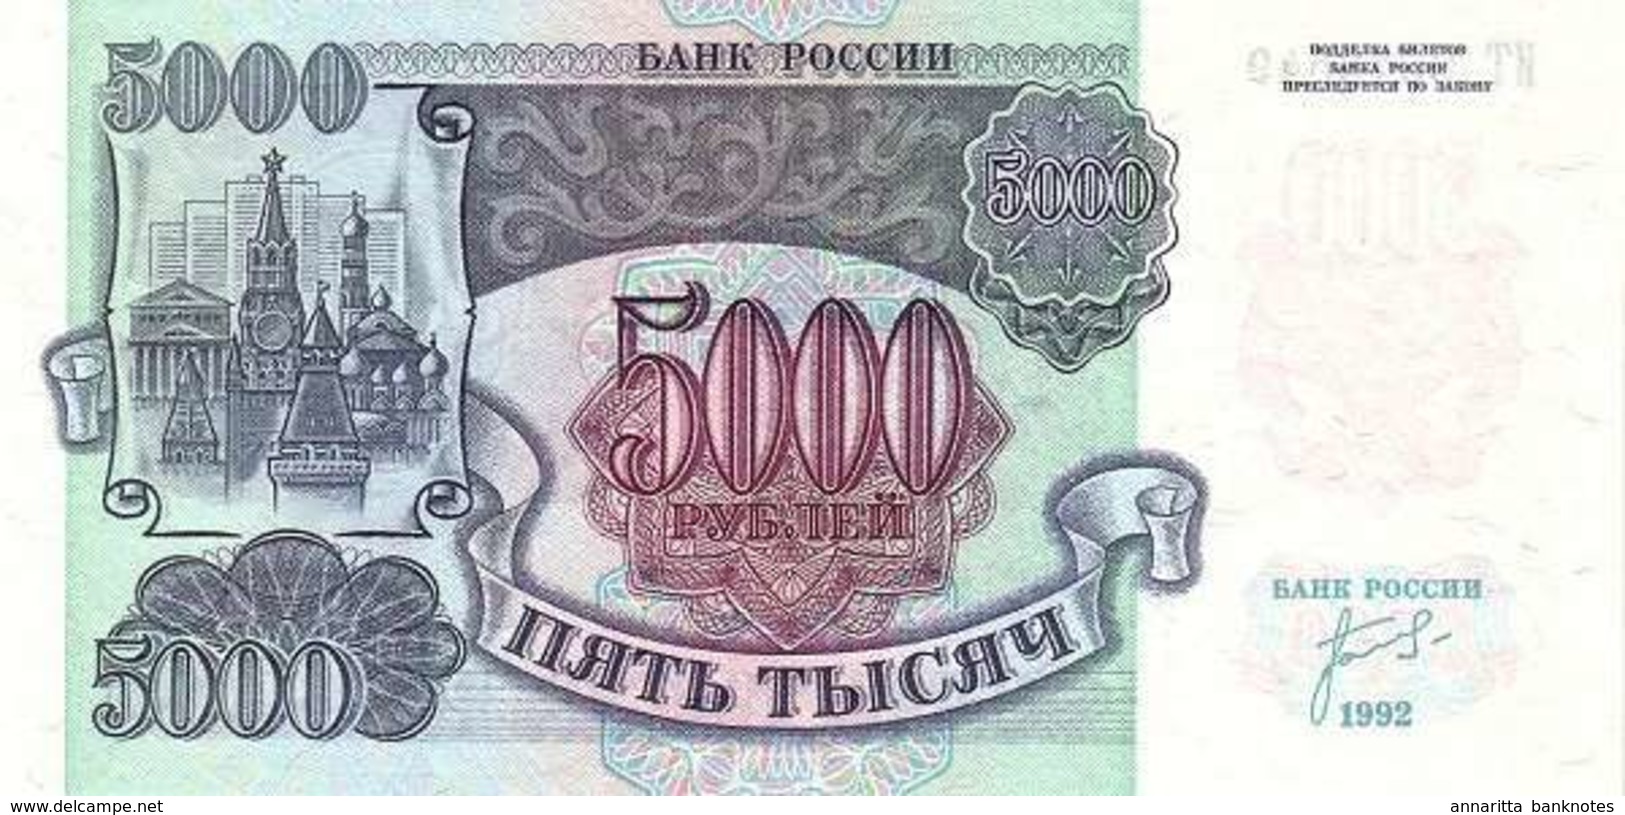 Russia (Россия) 5000 Pублей (Rubles) 1992, UNC, P-252a, RU801a - Russie